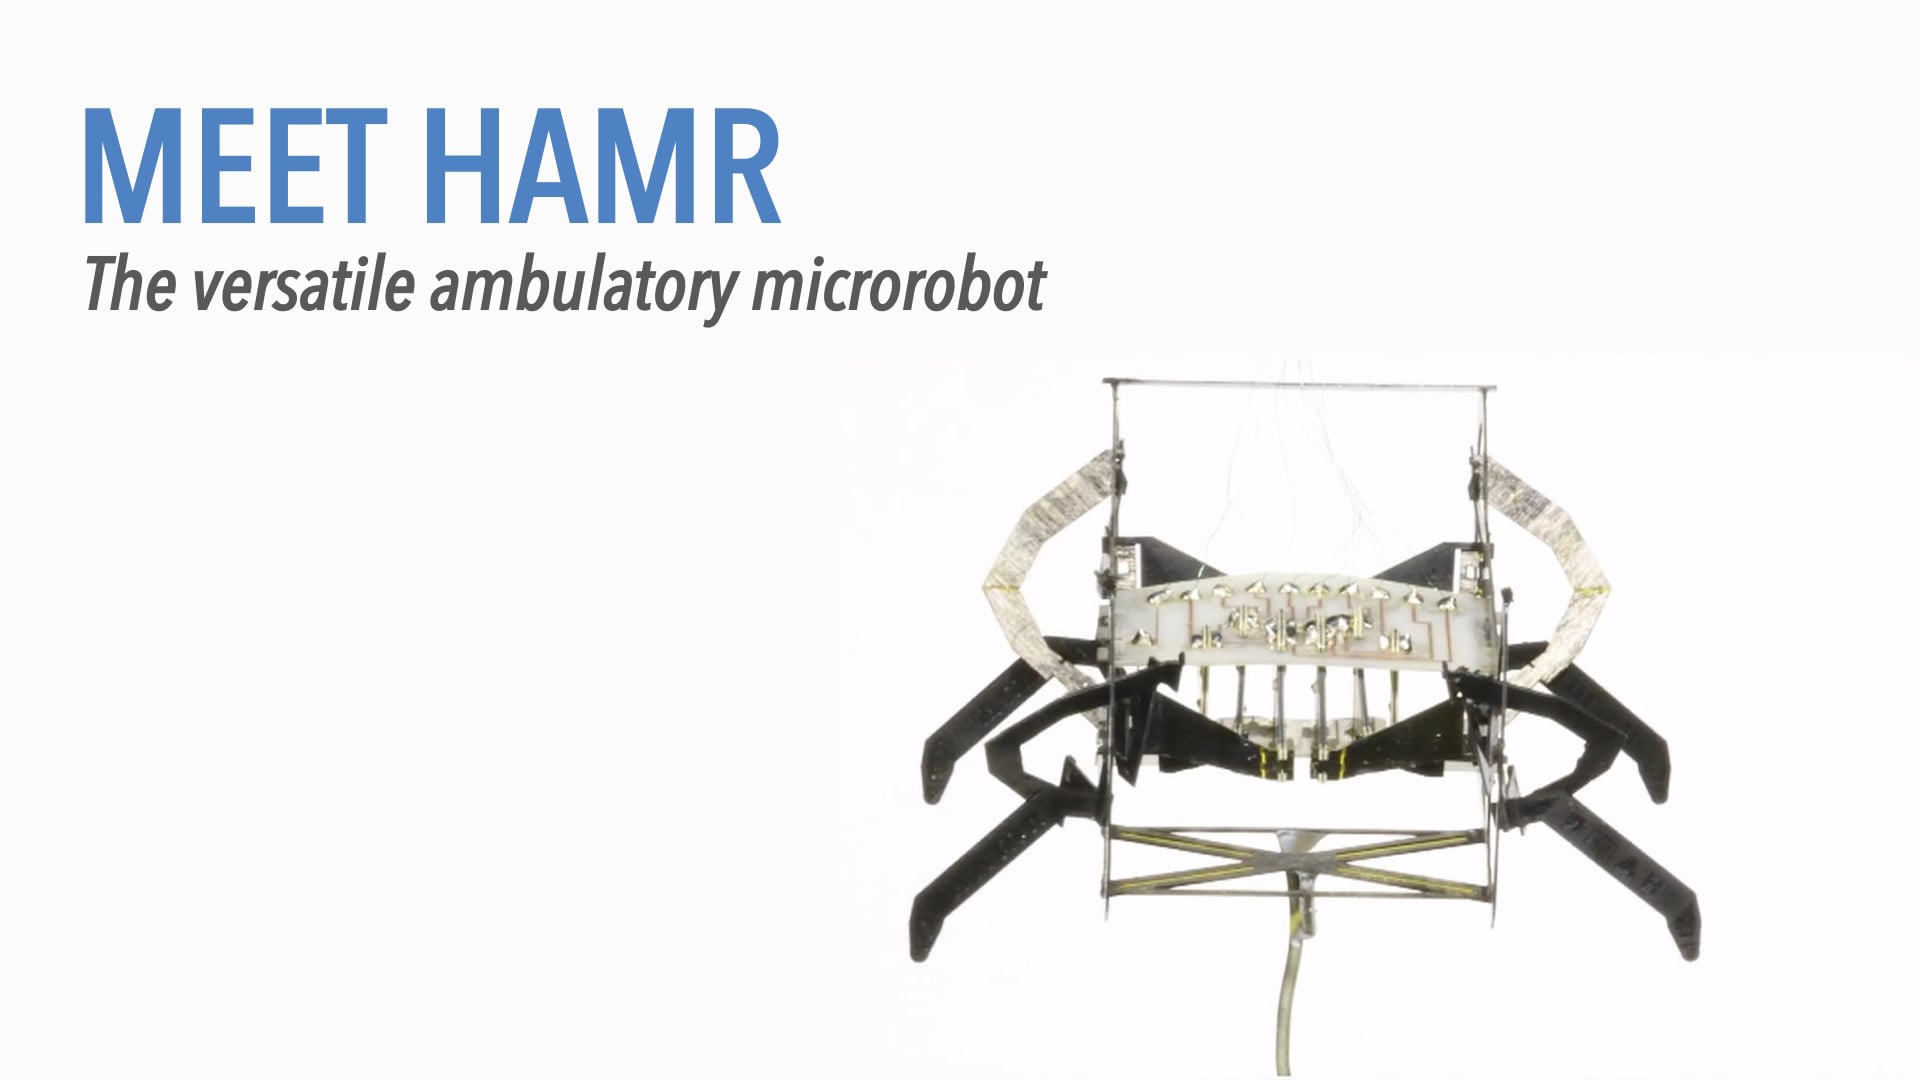 Meet HAMR: The versatile ambulatory microrobot